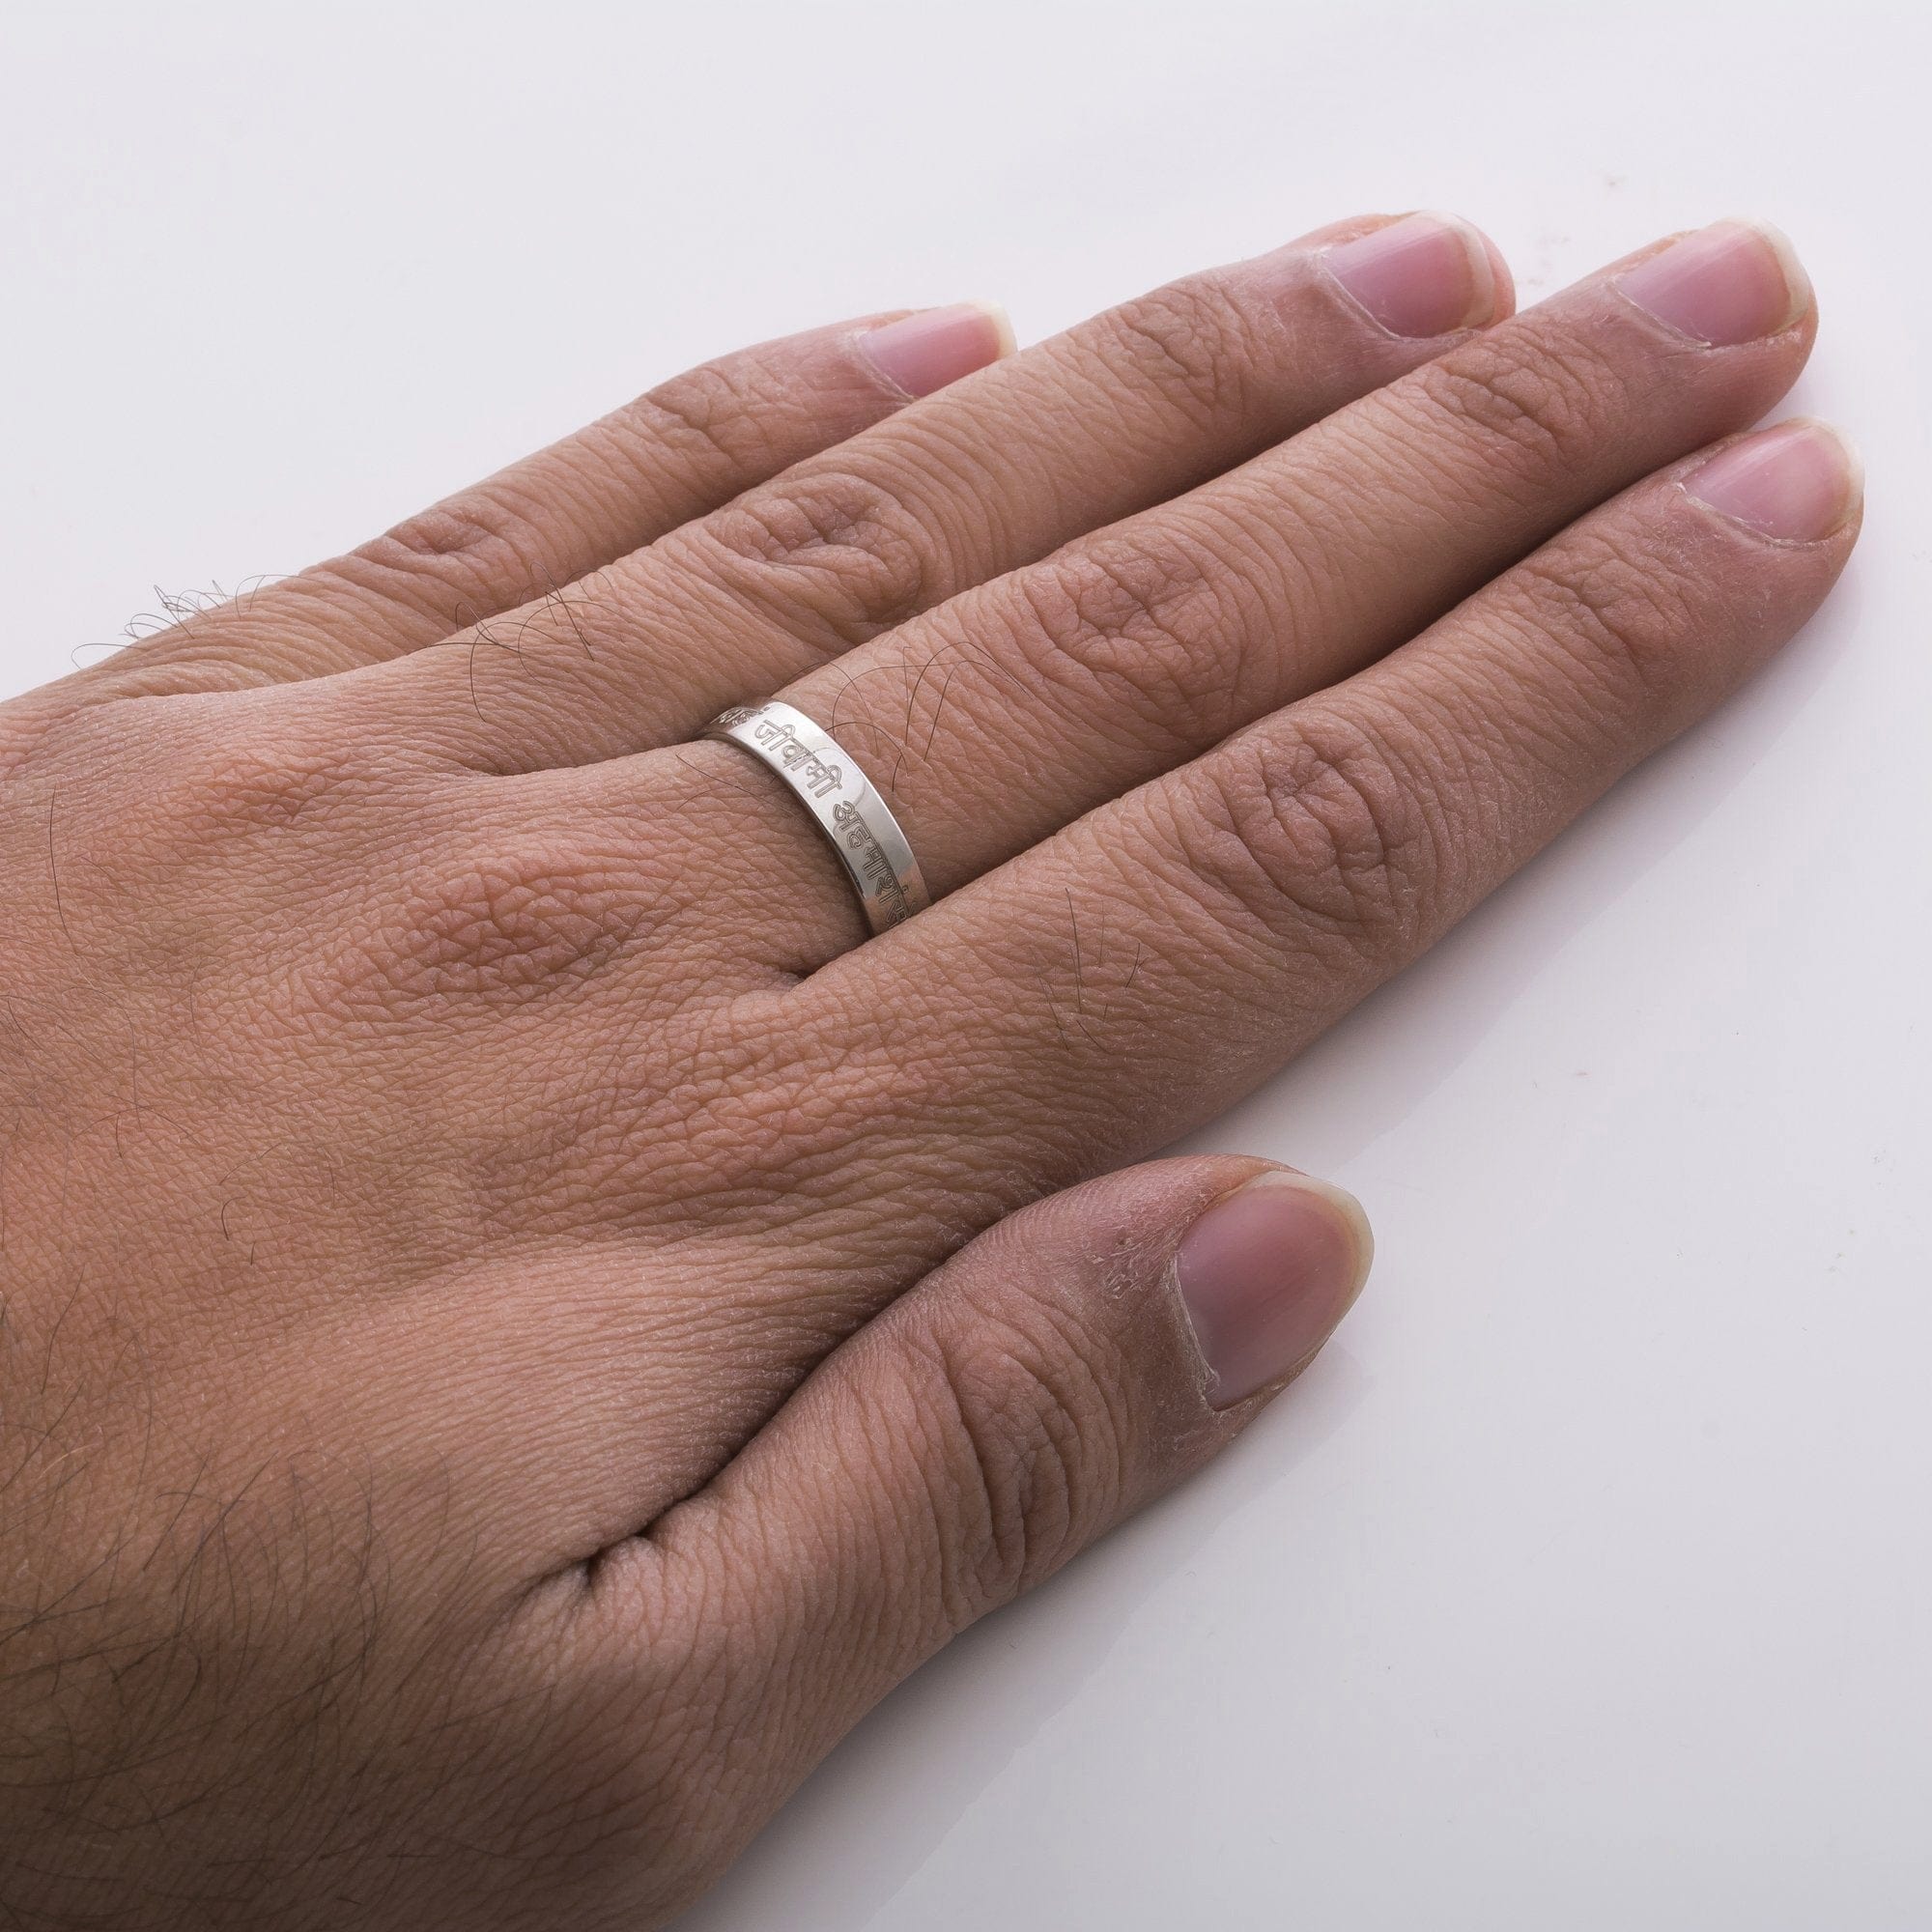 18k Hand Engraved Vintage Inspired Engagement Ring Setting